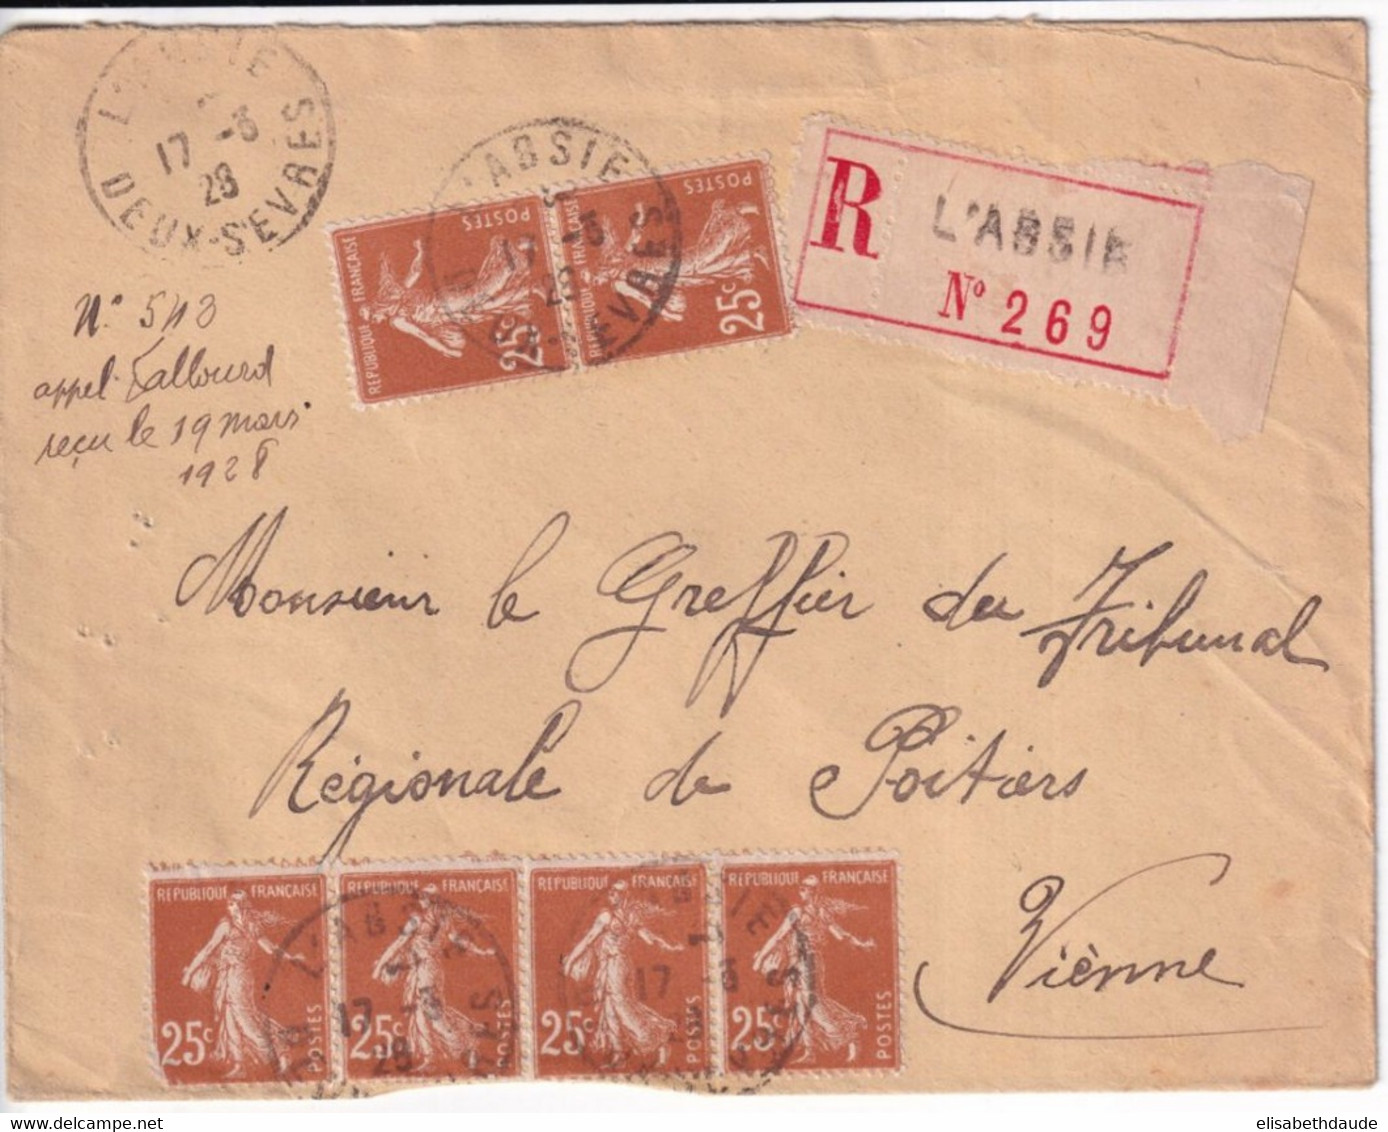 SEMEUSE CAMEE YVERT 235 - 1928 - ENVELOPPE RECOMMANDEE De L'ABSIE (DEUX-SEVRES) - 1906-38 Sower - Cameo